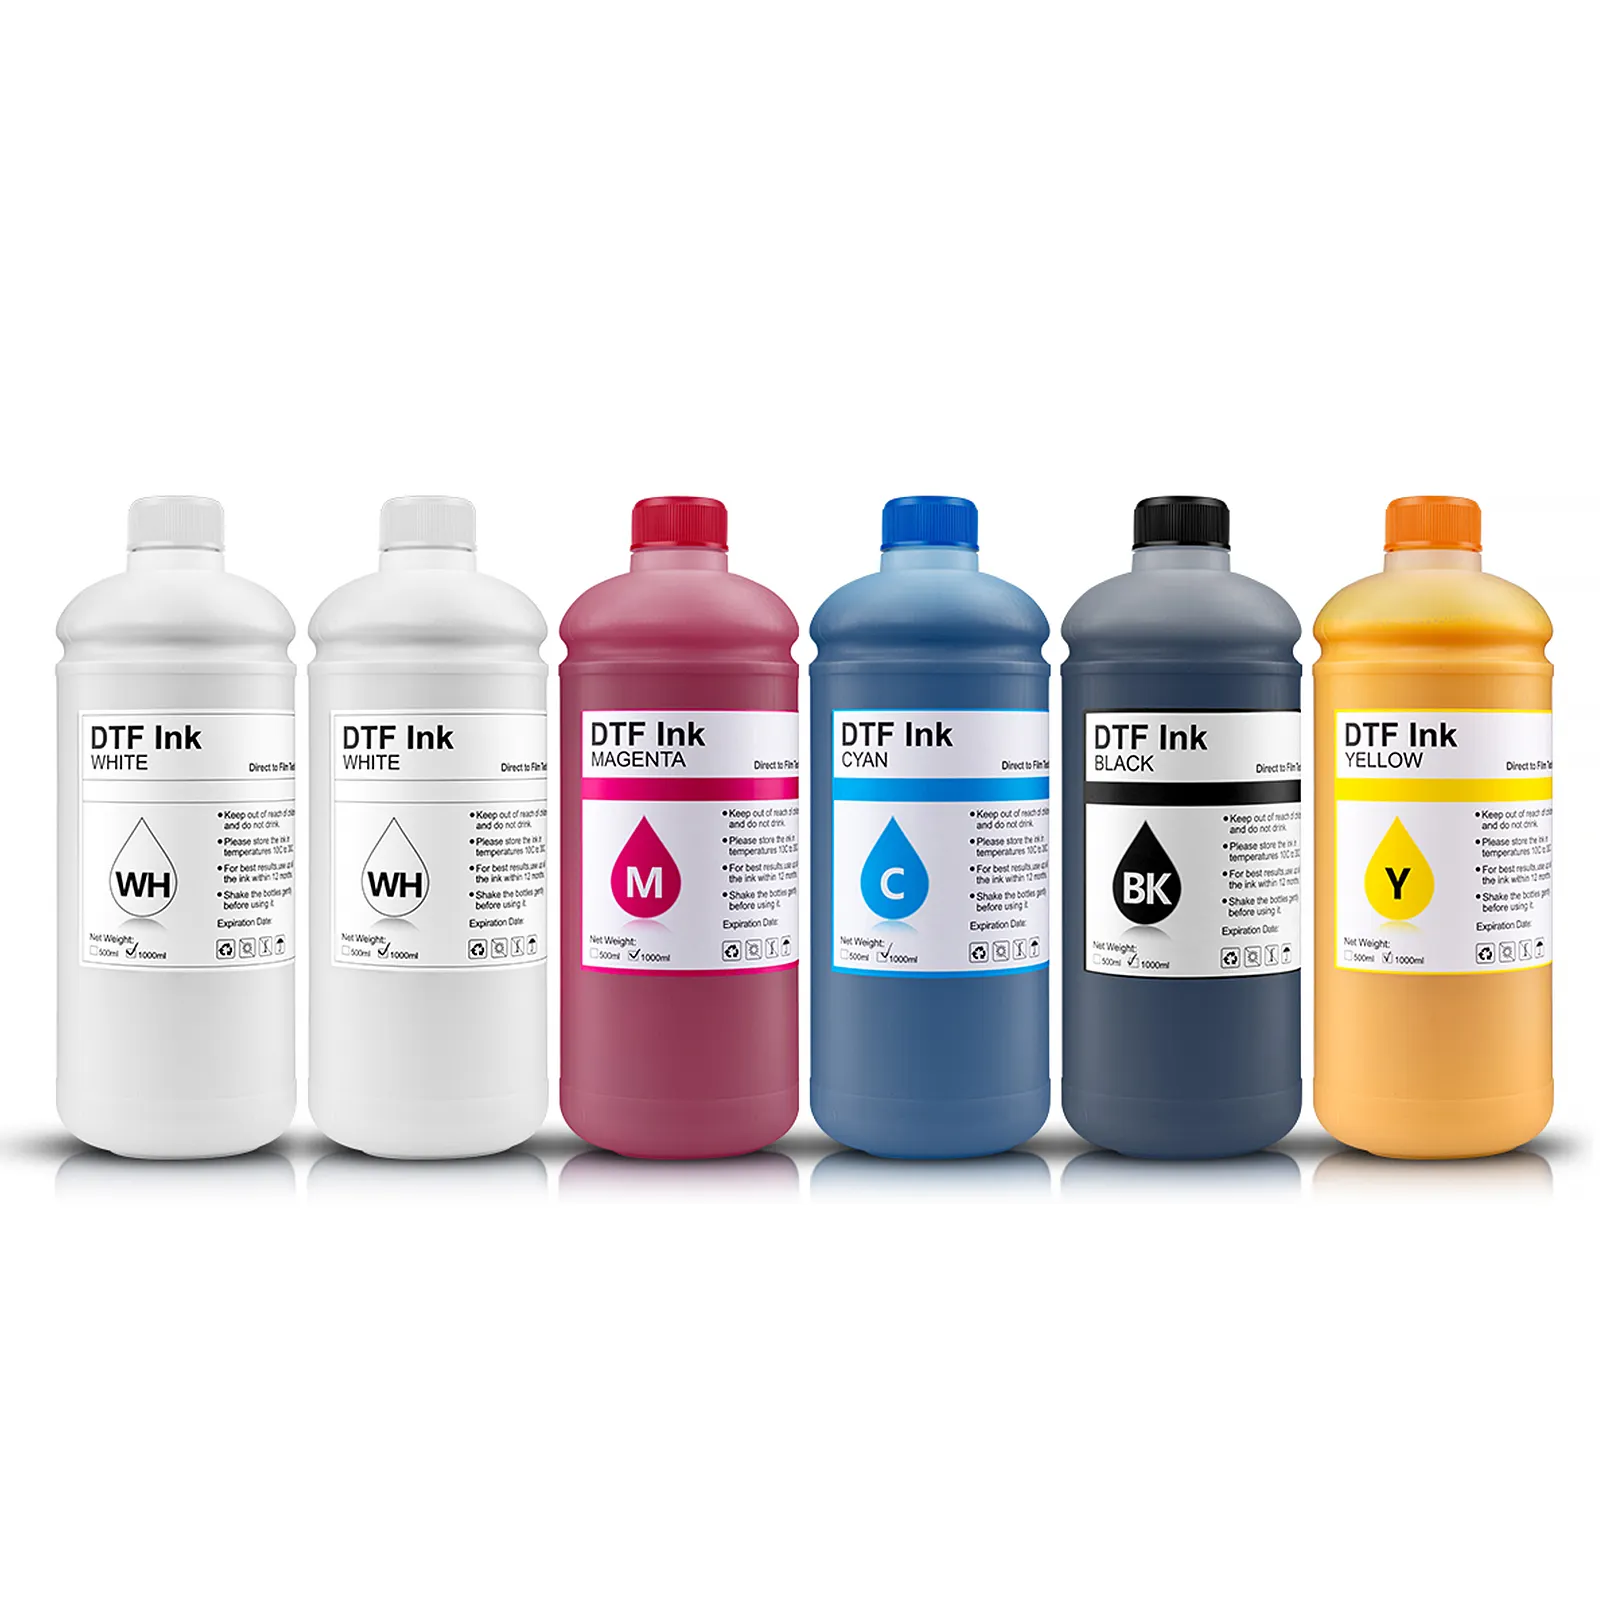 Supercolor 5L in den USA ansässige YYK Fabricante De City Baumwollstoffdruck DTF Textiltinte für Epson Sure Color 8550 1800 DX4 DF6301